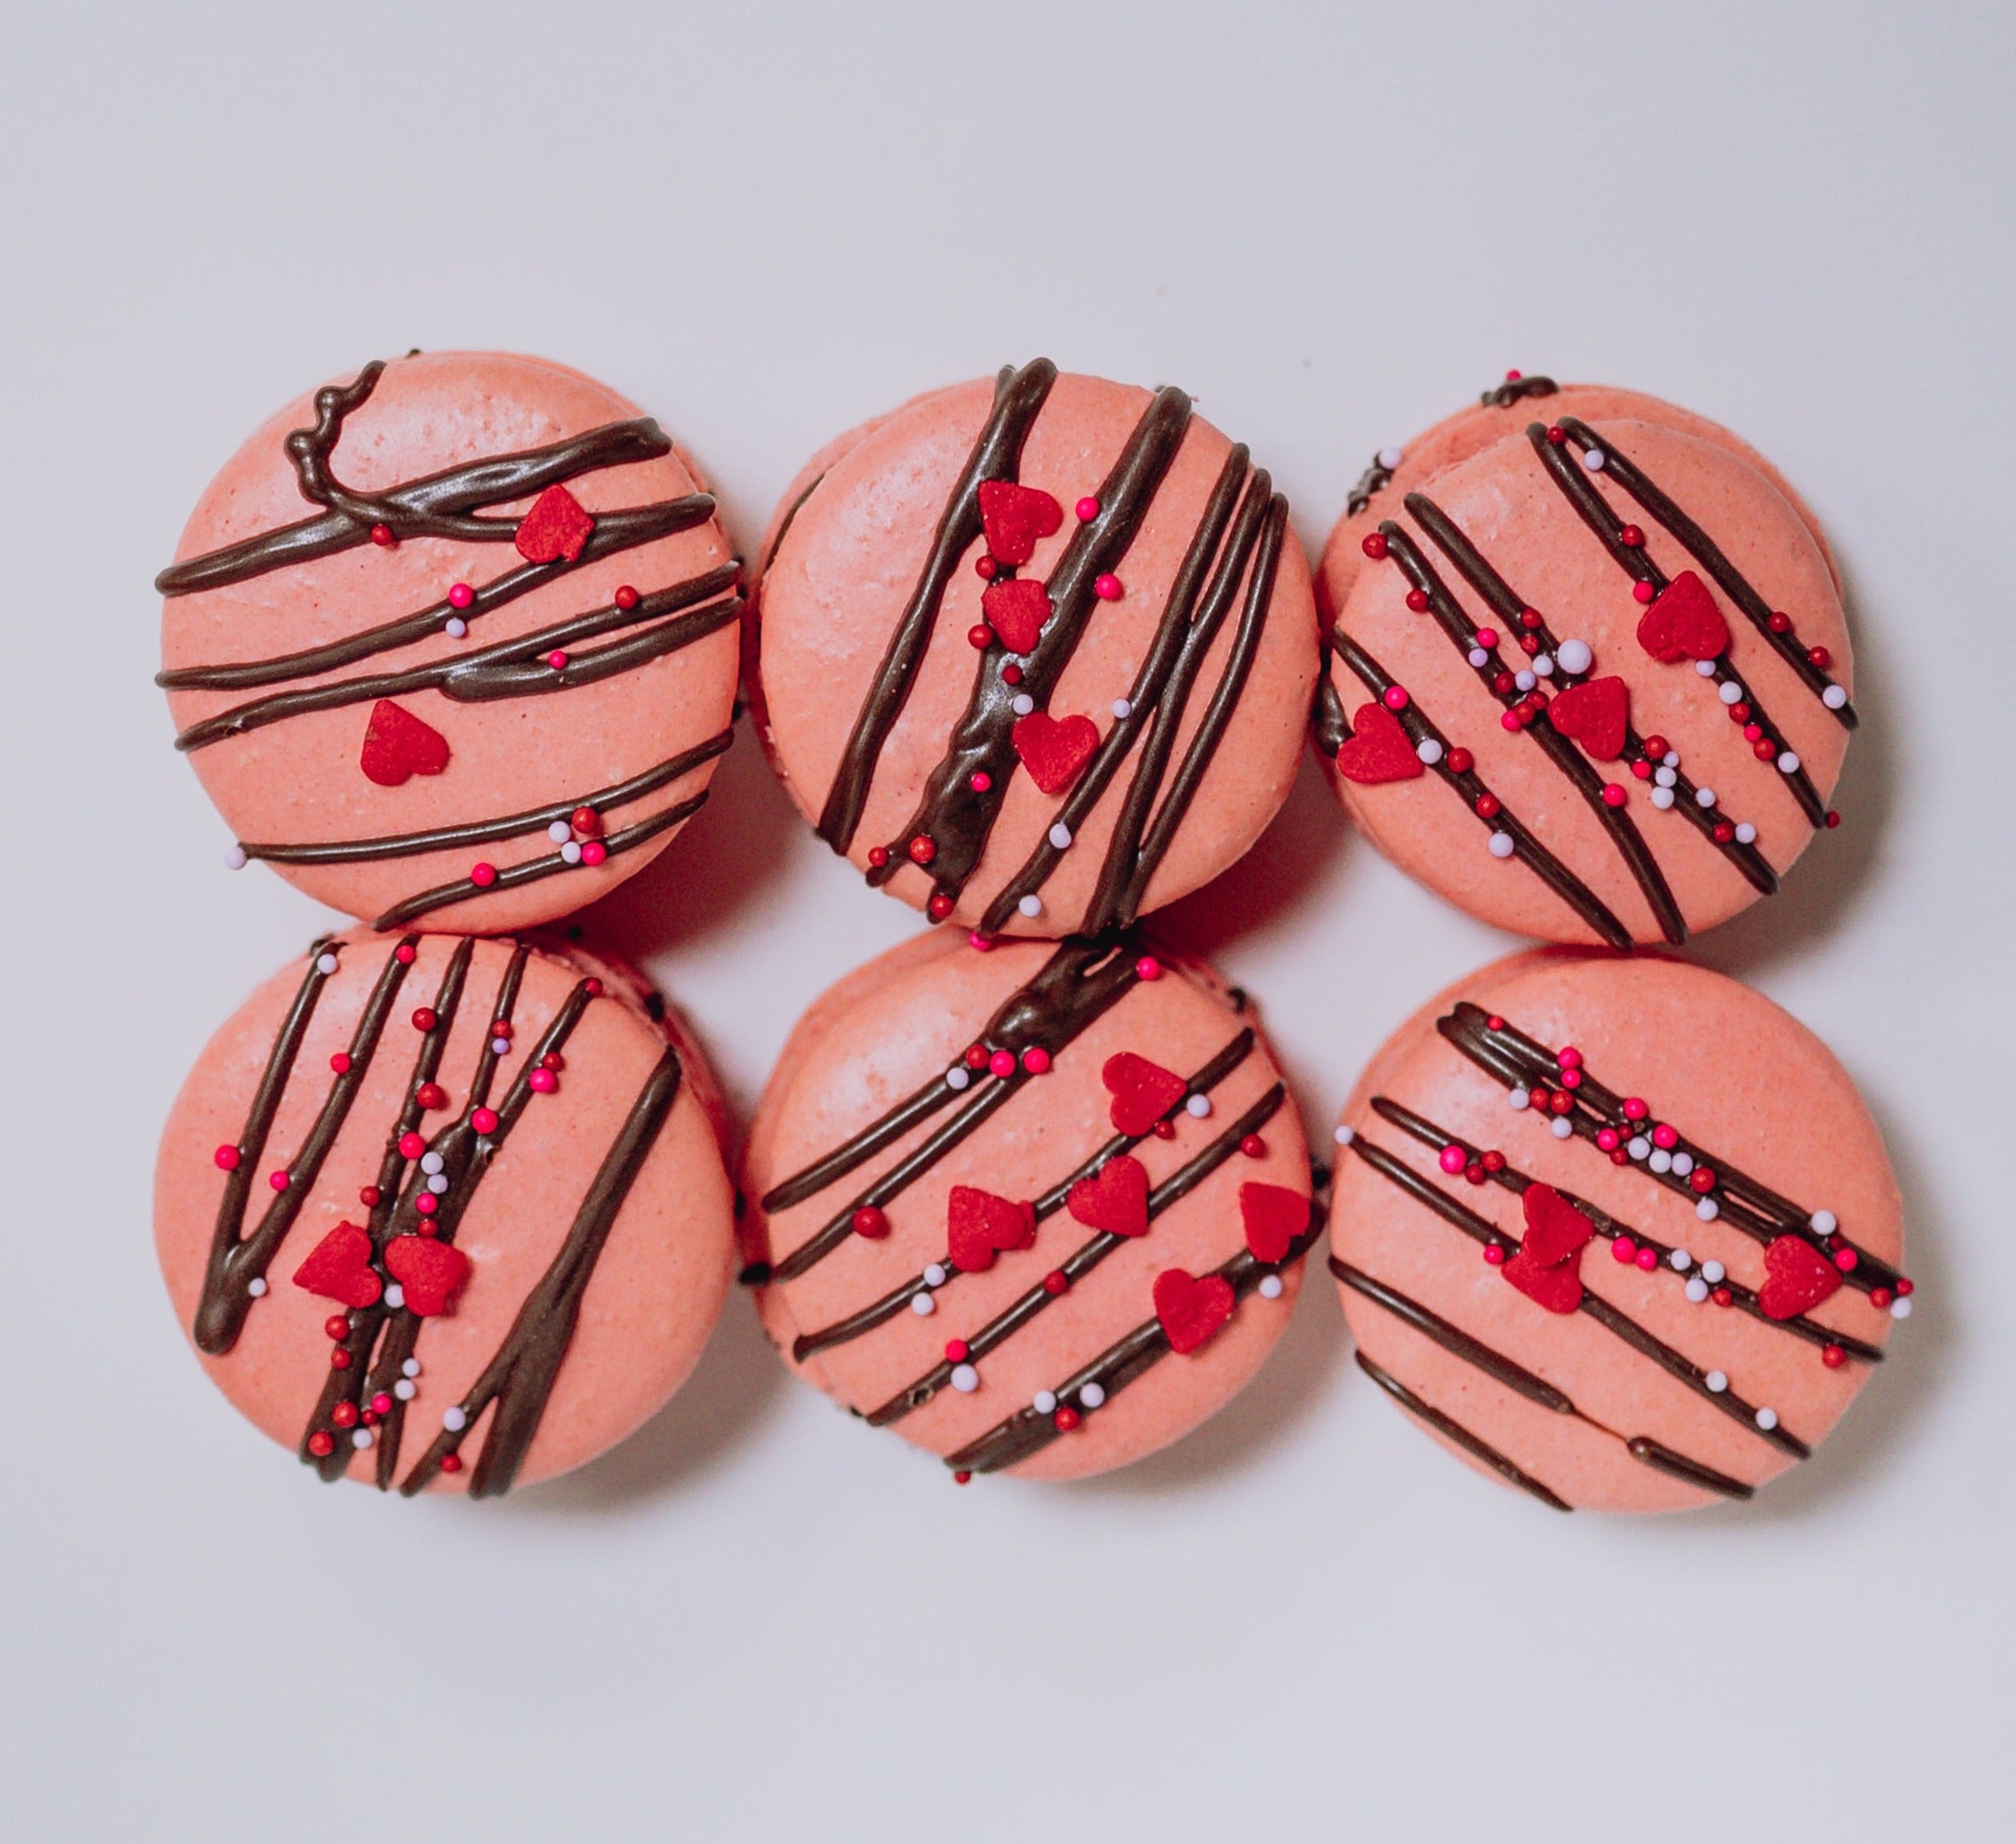 Chocolate Covered Strawberry - Izzy Macarons